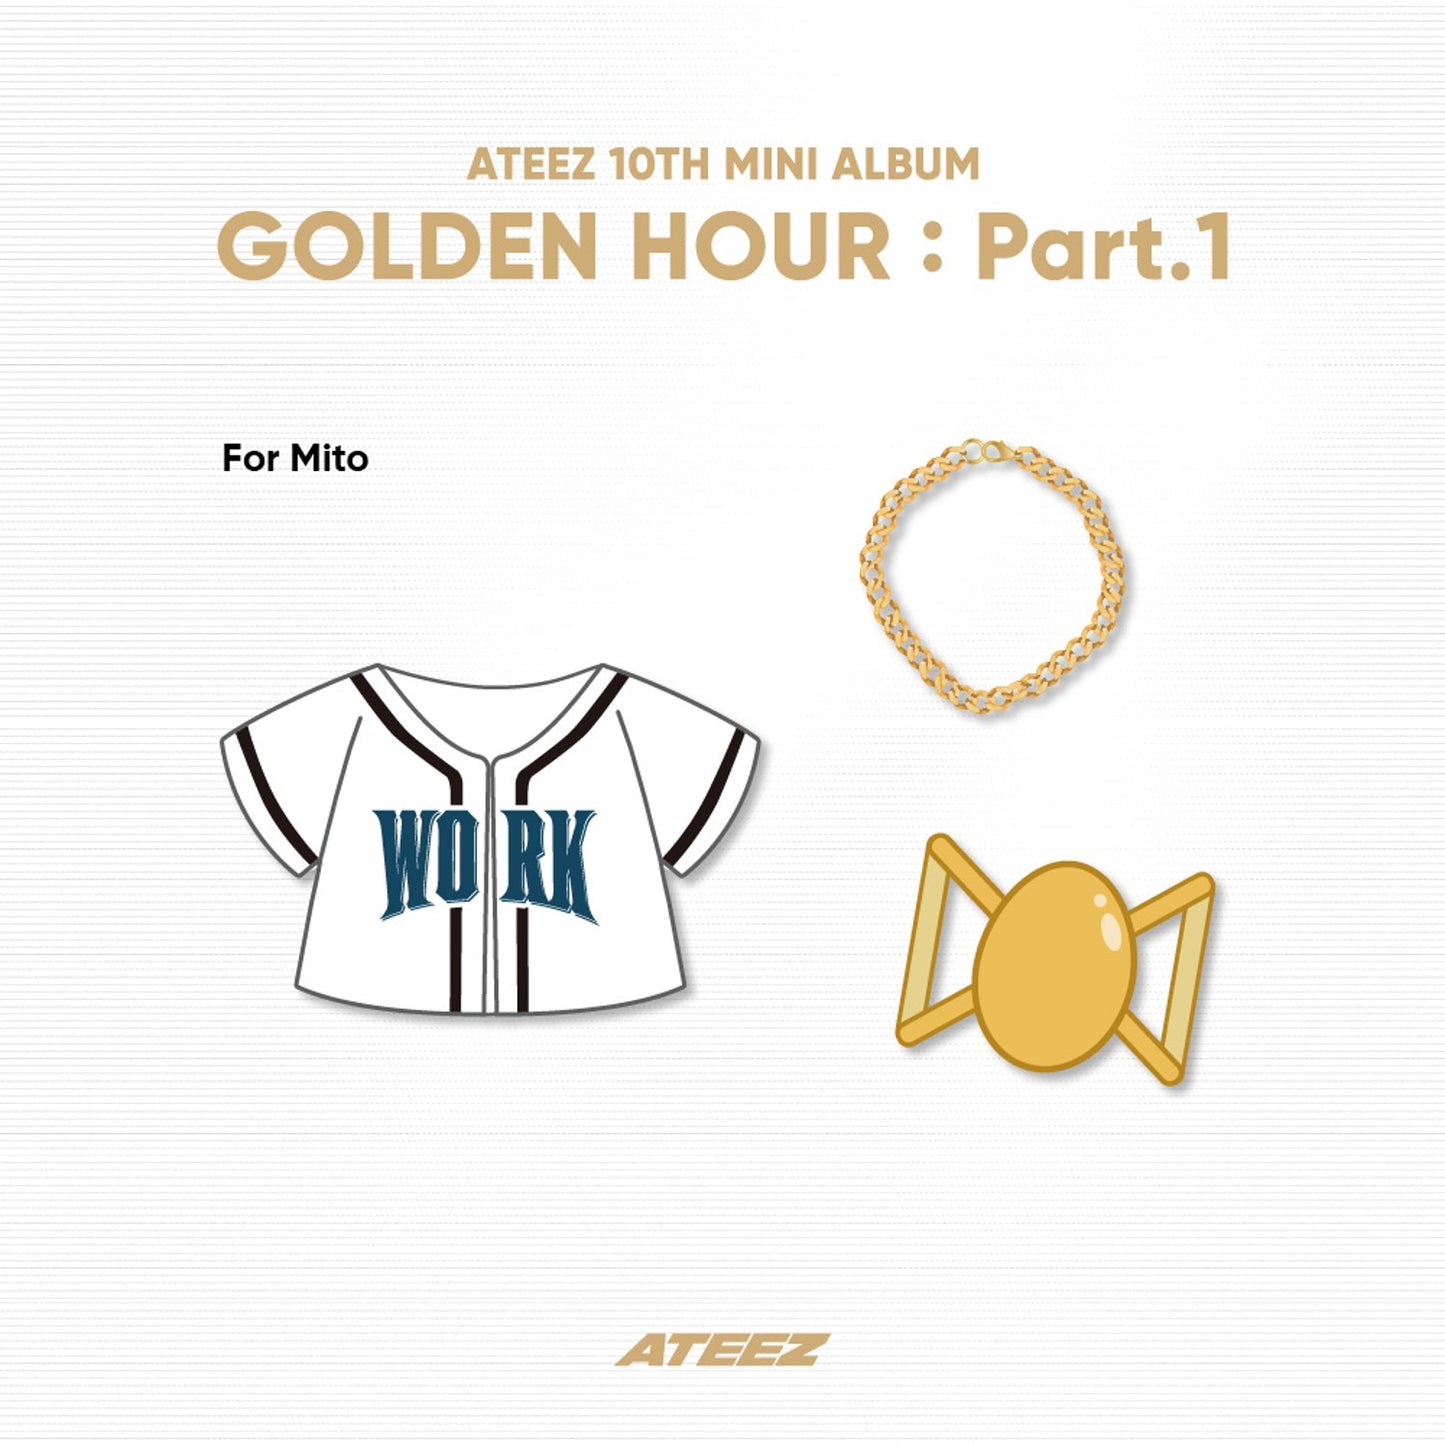 [PRE ORDER] ATEEZ 10TH MINI ALBUM [GOLDEN HOUR : Part.1] POP-UP EXHIBITION & STORE - OFFICIAL MERCH 2nd LINE UP